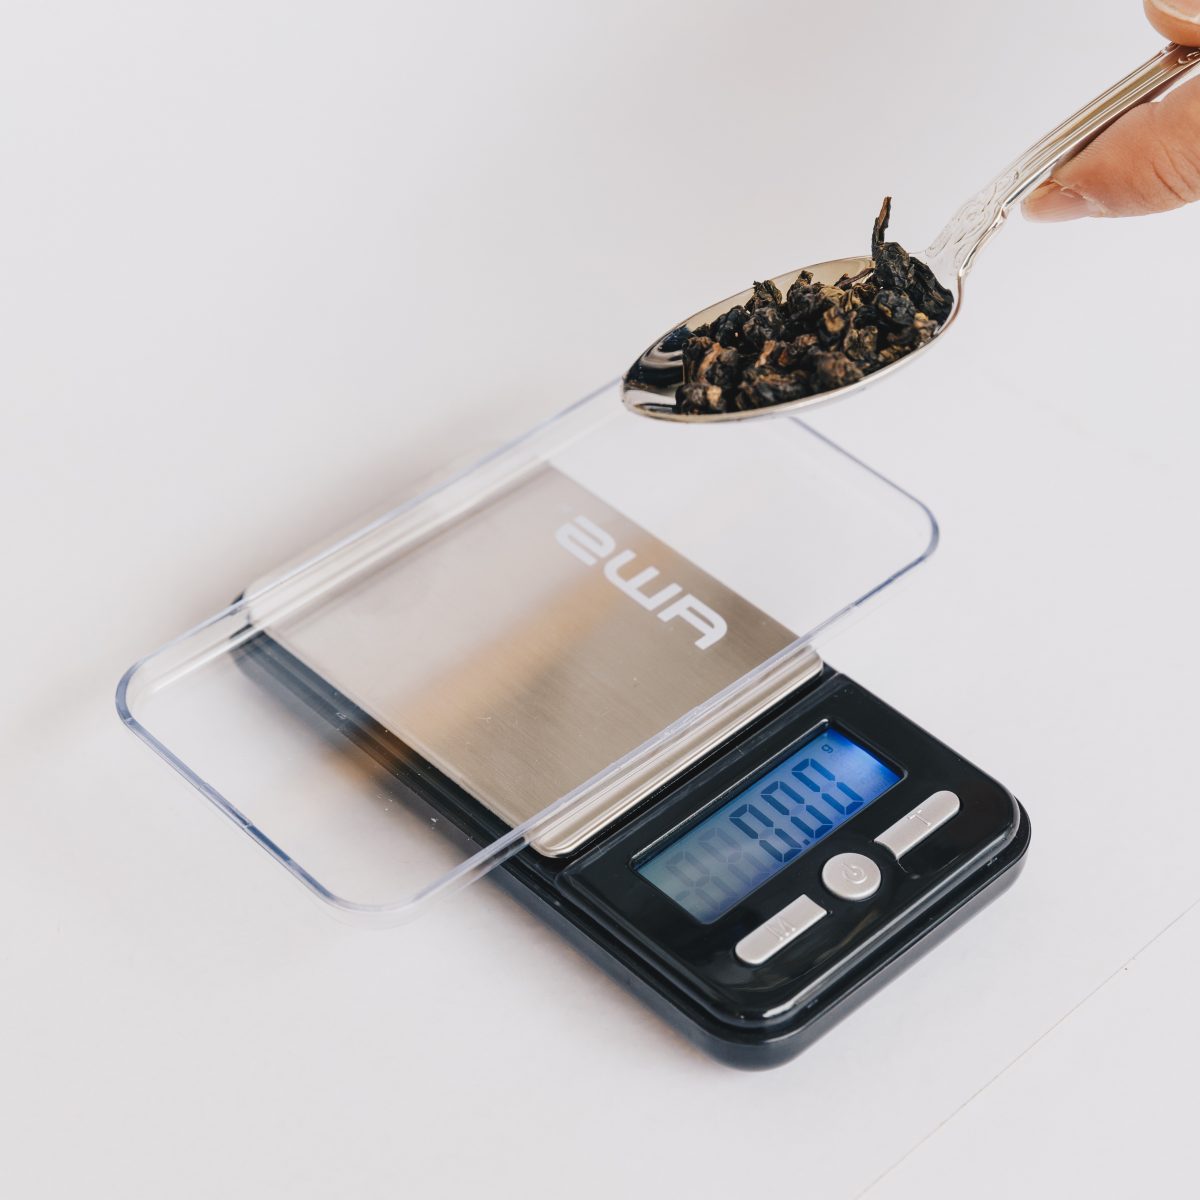 Measuring your Tea: Digital Pocket Scales